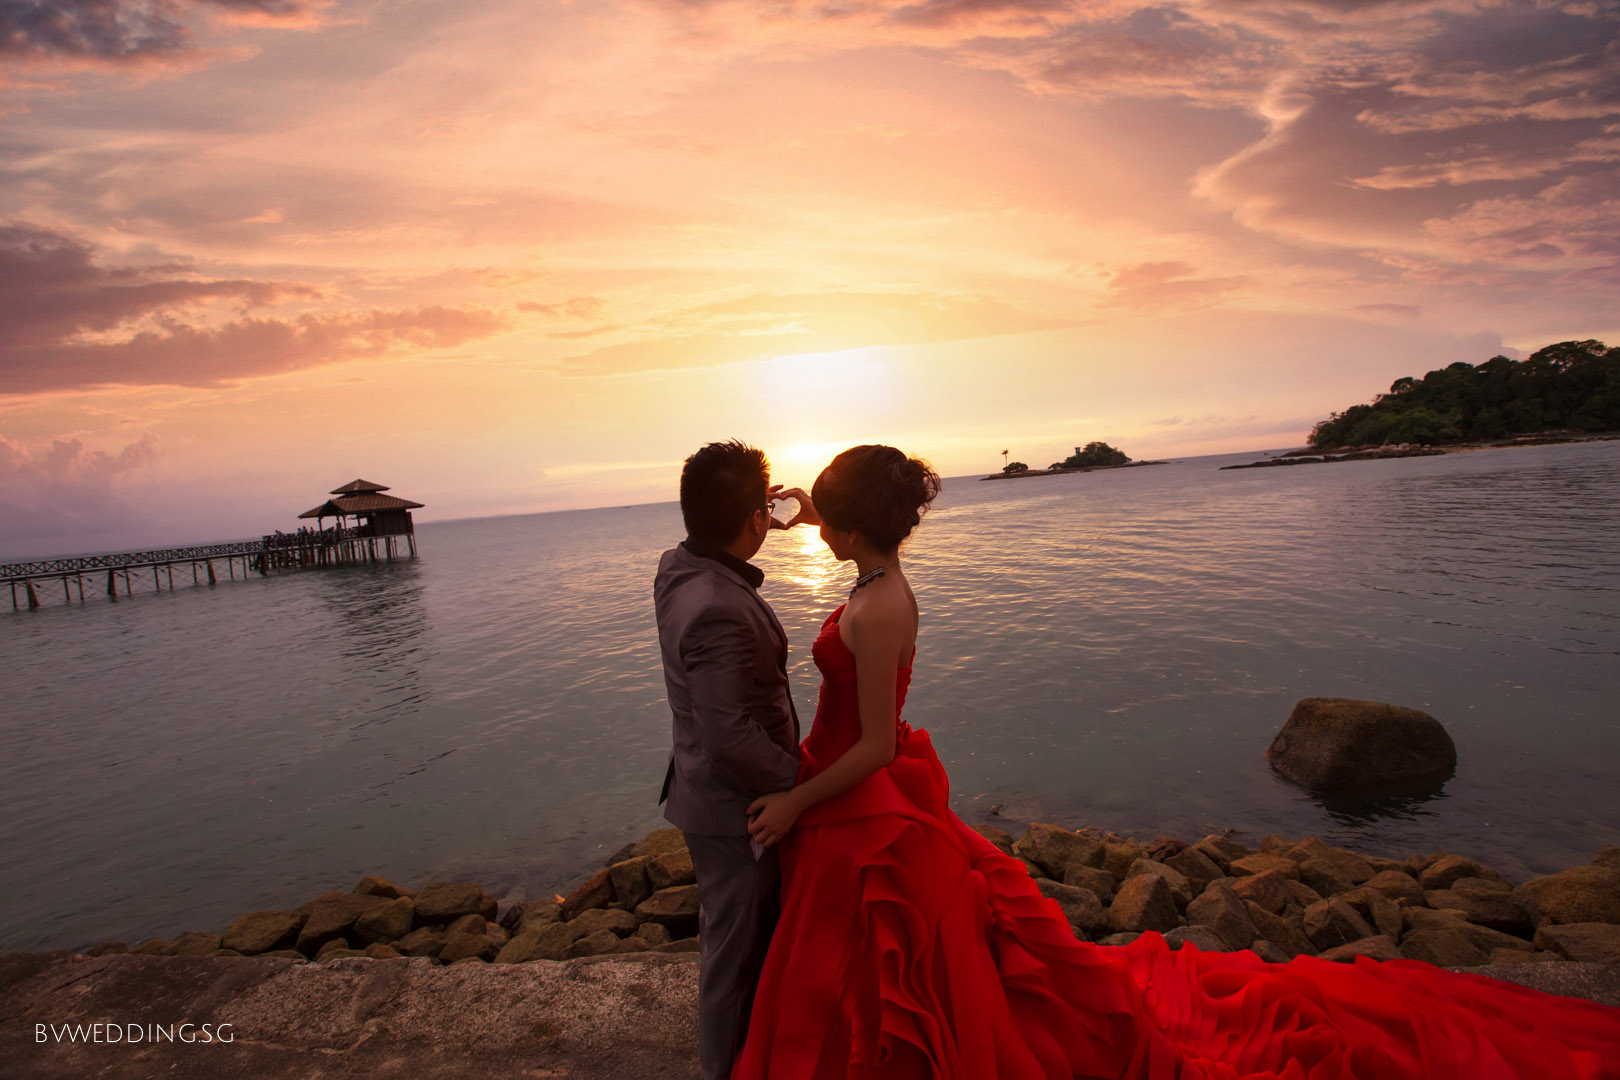 Pre-wedding photoshoot at bintan island with sunset